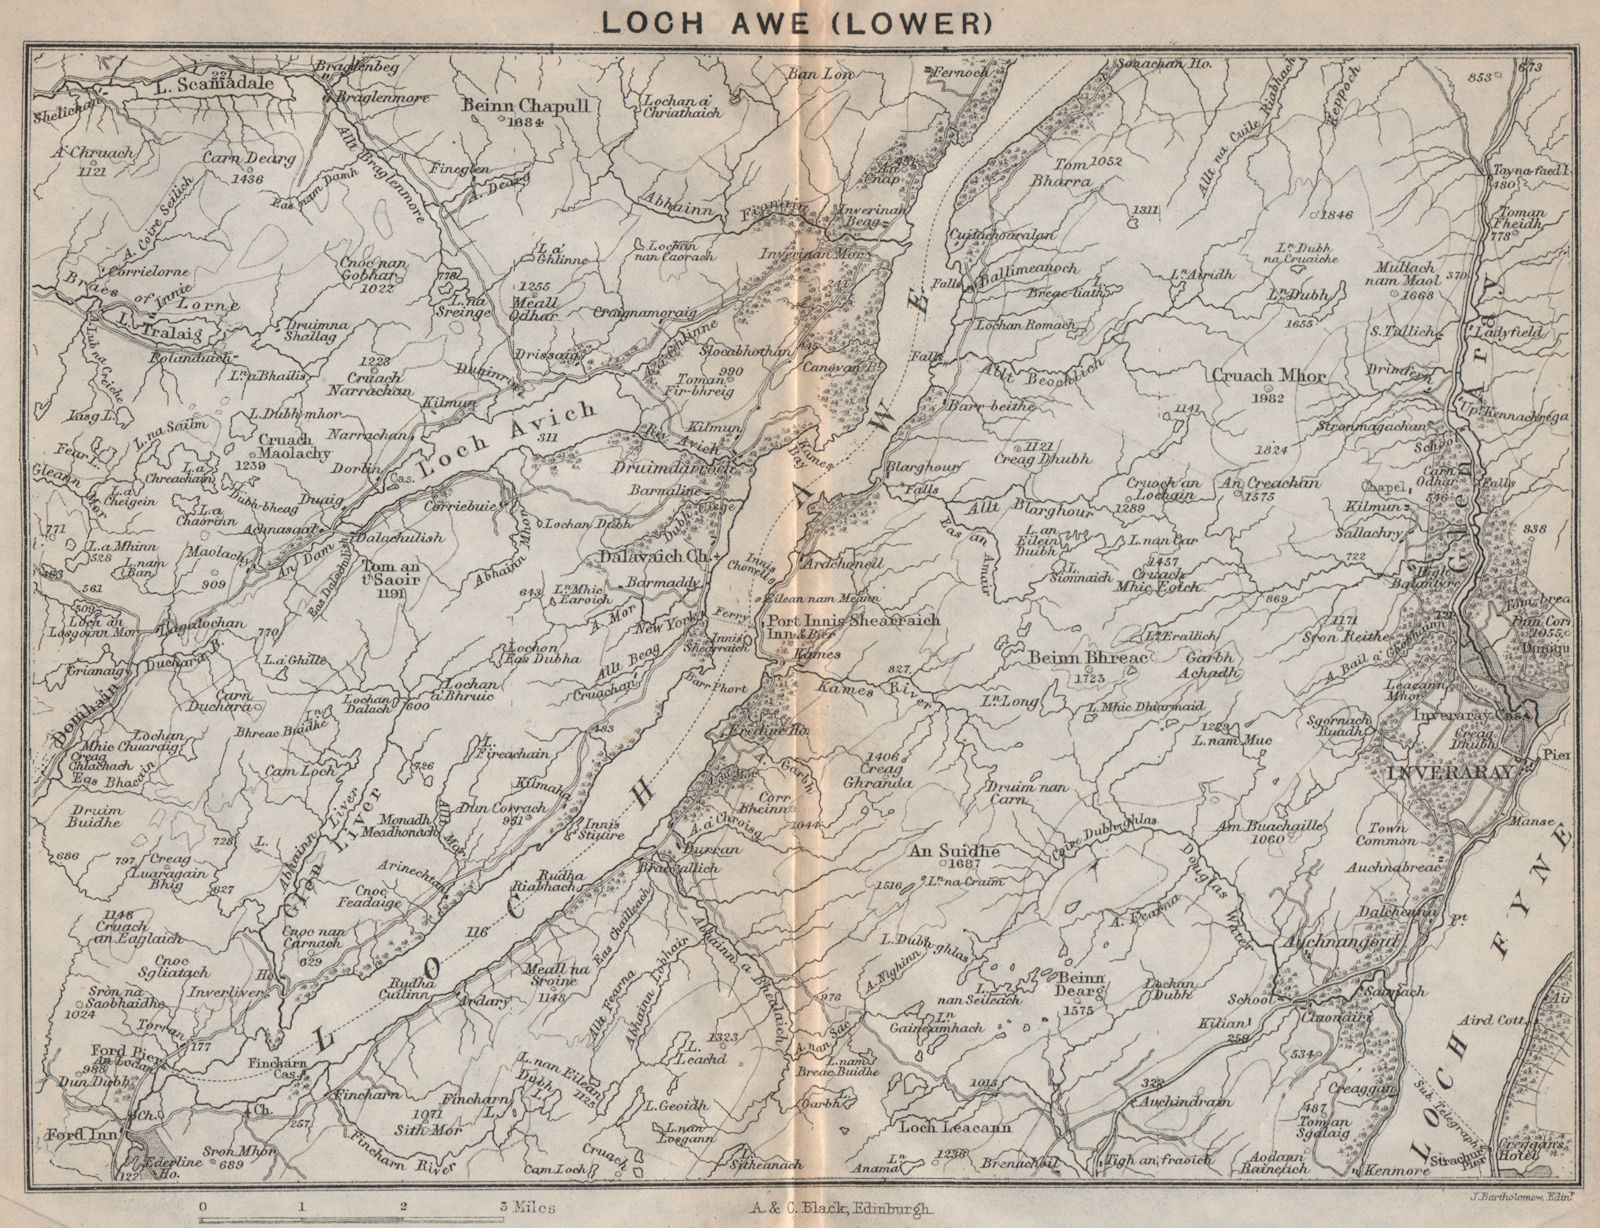 Associate Product Lower Loch Awe. Loch Fyne. Loch Avich. Inverary. Scotland 1886 old antique map